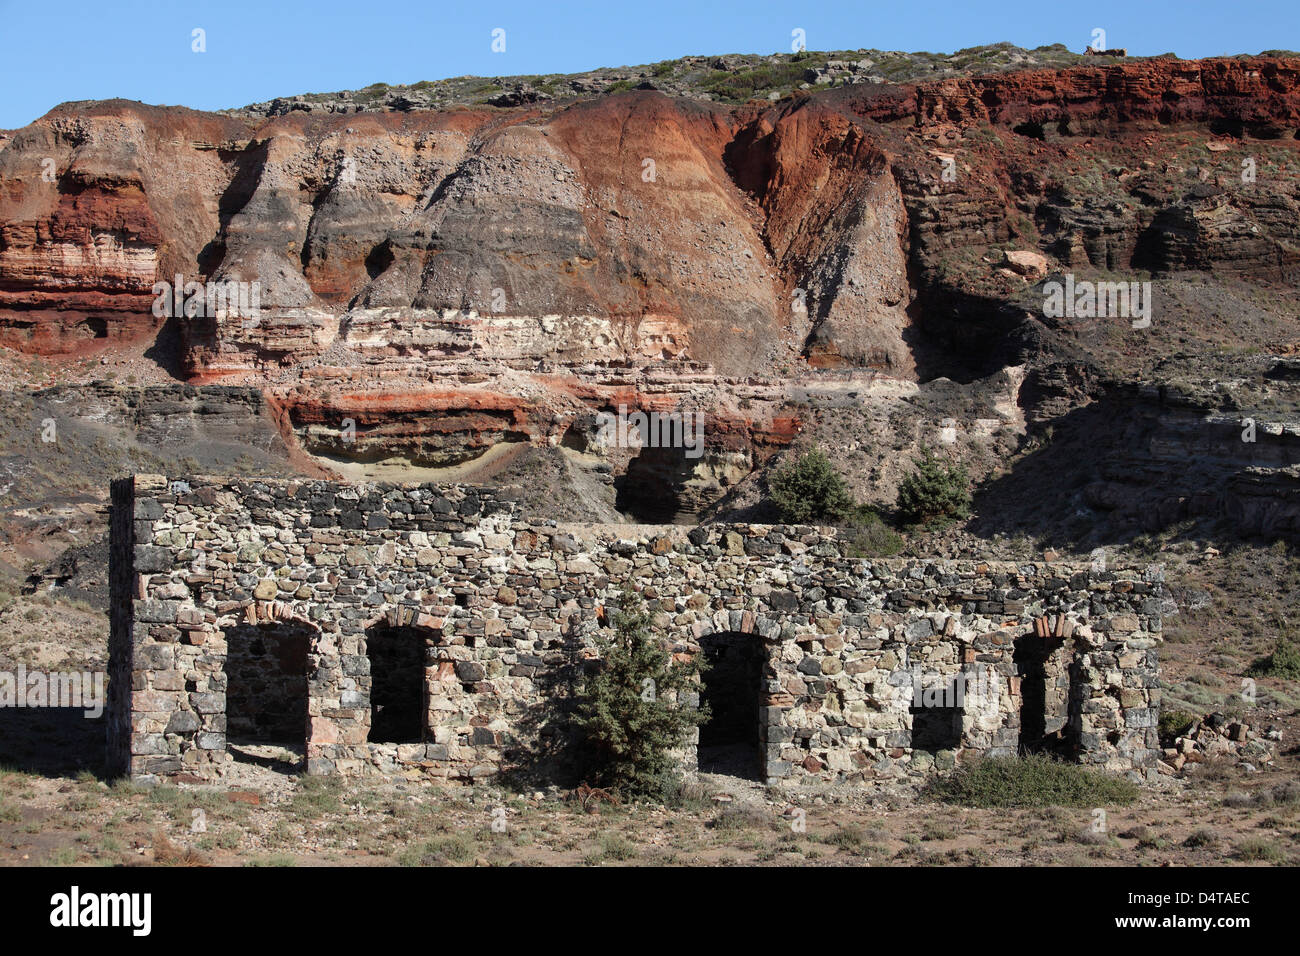 Abandoned Manganese Mine at Cape Vani, Milos Island, Greece. Image shows ruined building. Stock Photo